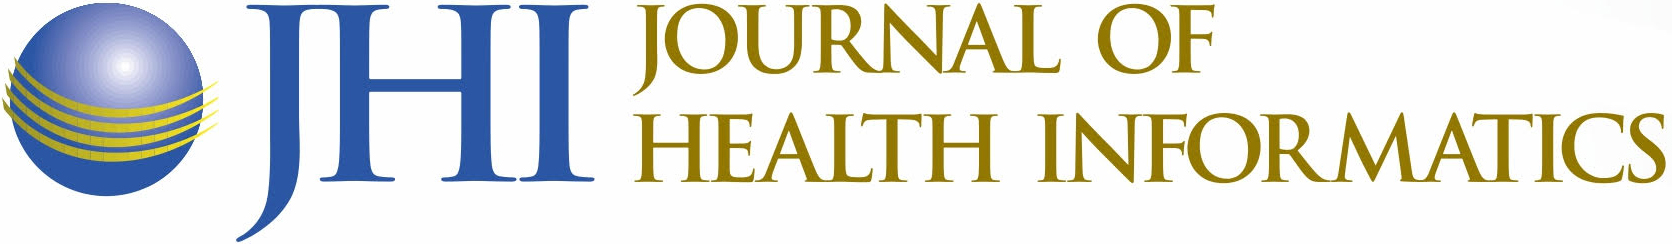 Journal of Health Informatics ISSN 2175-4411